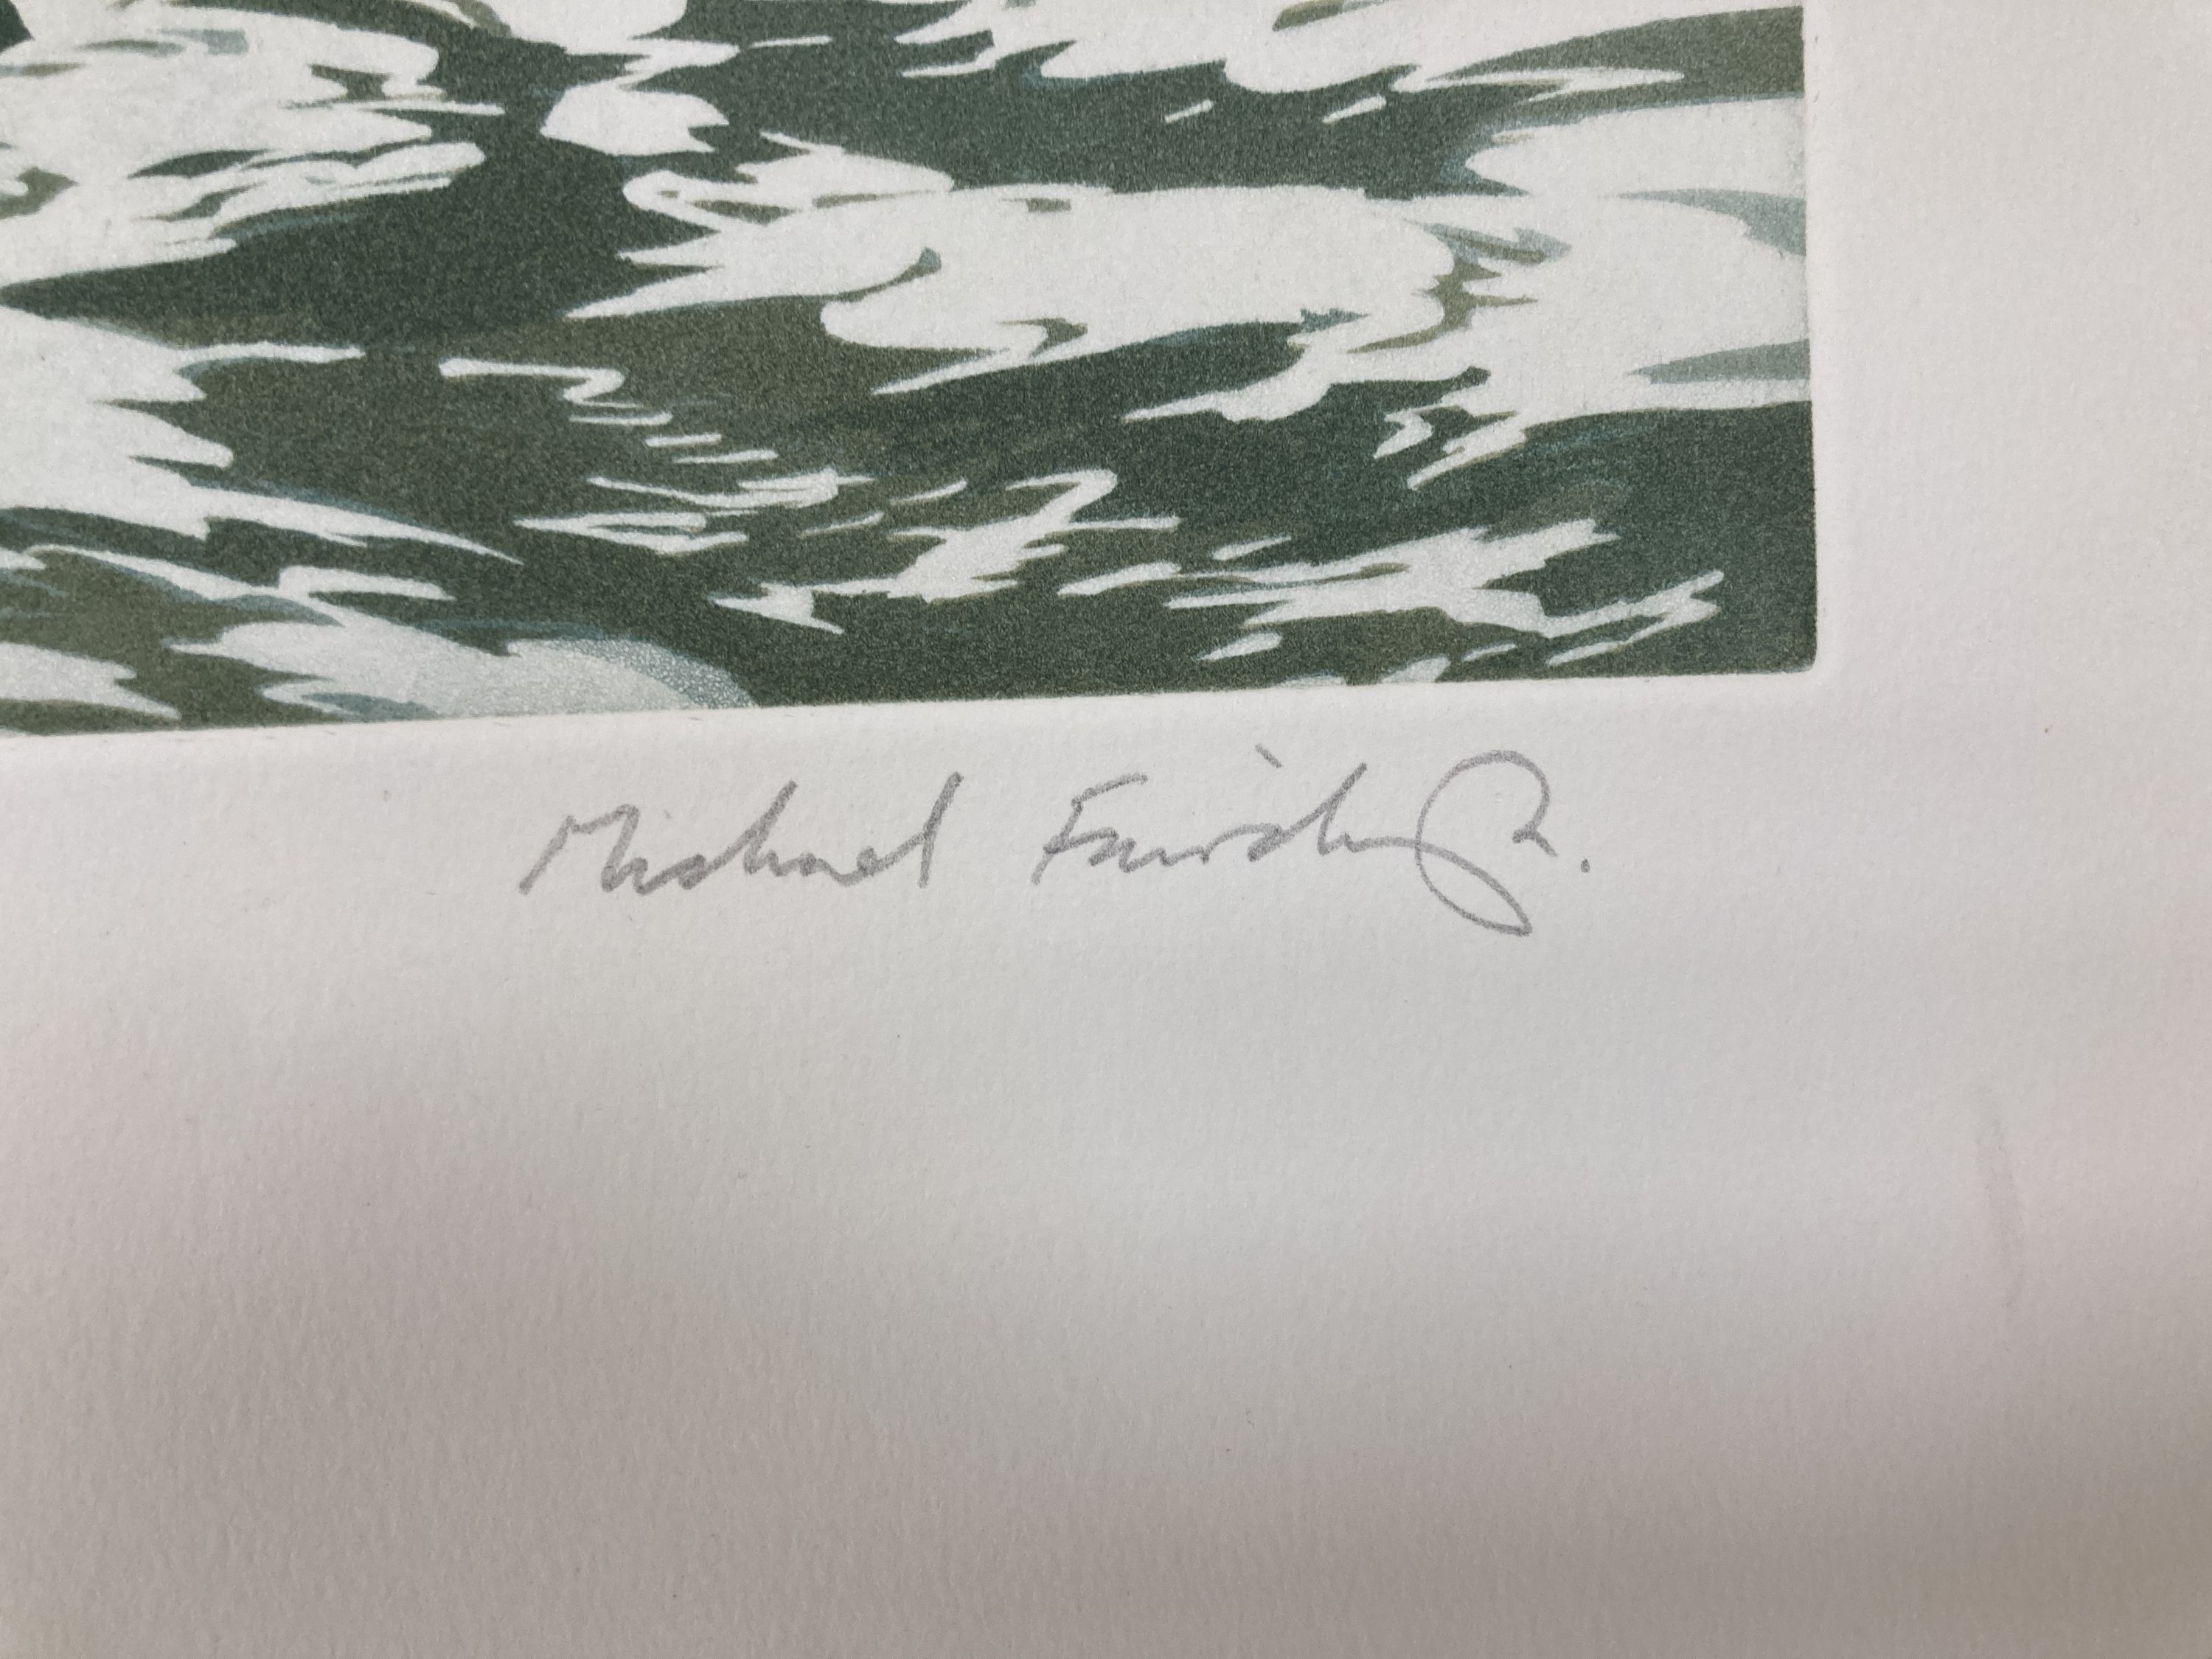 Michael Fairclough, limited edition print, Sea cliffs, signed in pencil, 135/350, 46 x 51cm